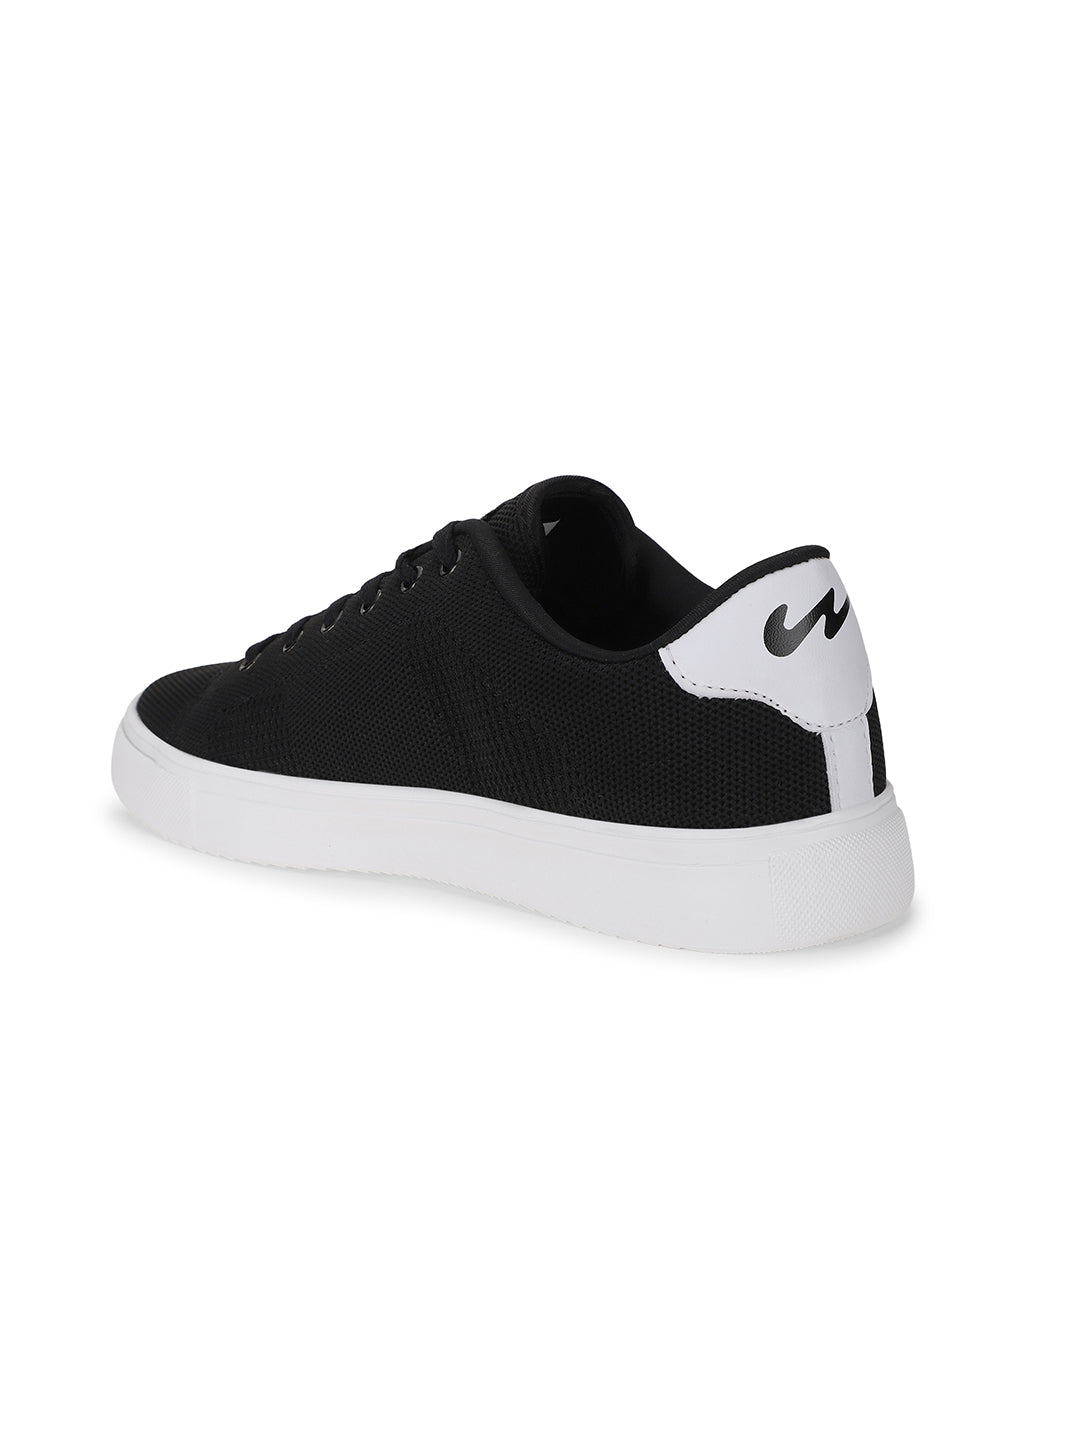 Buy OG-05 Black Men's Sneakers online | Campus Shoes